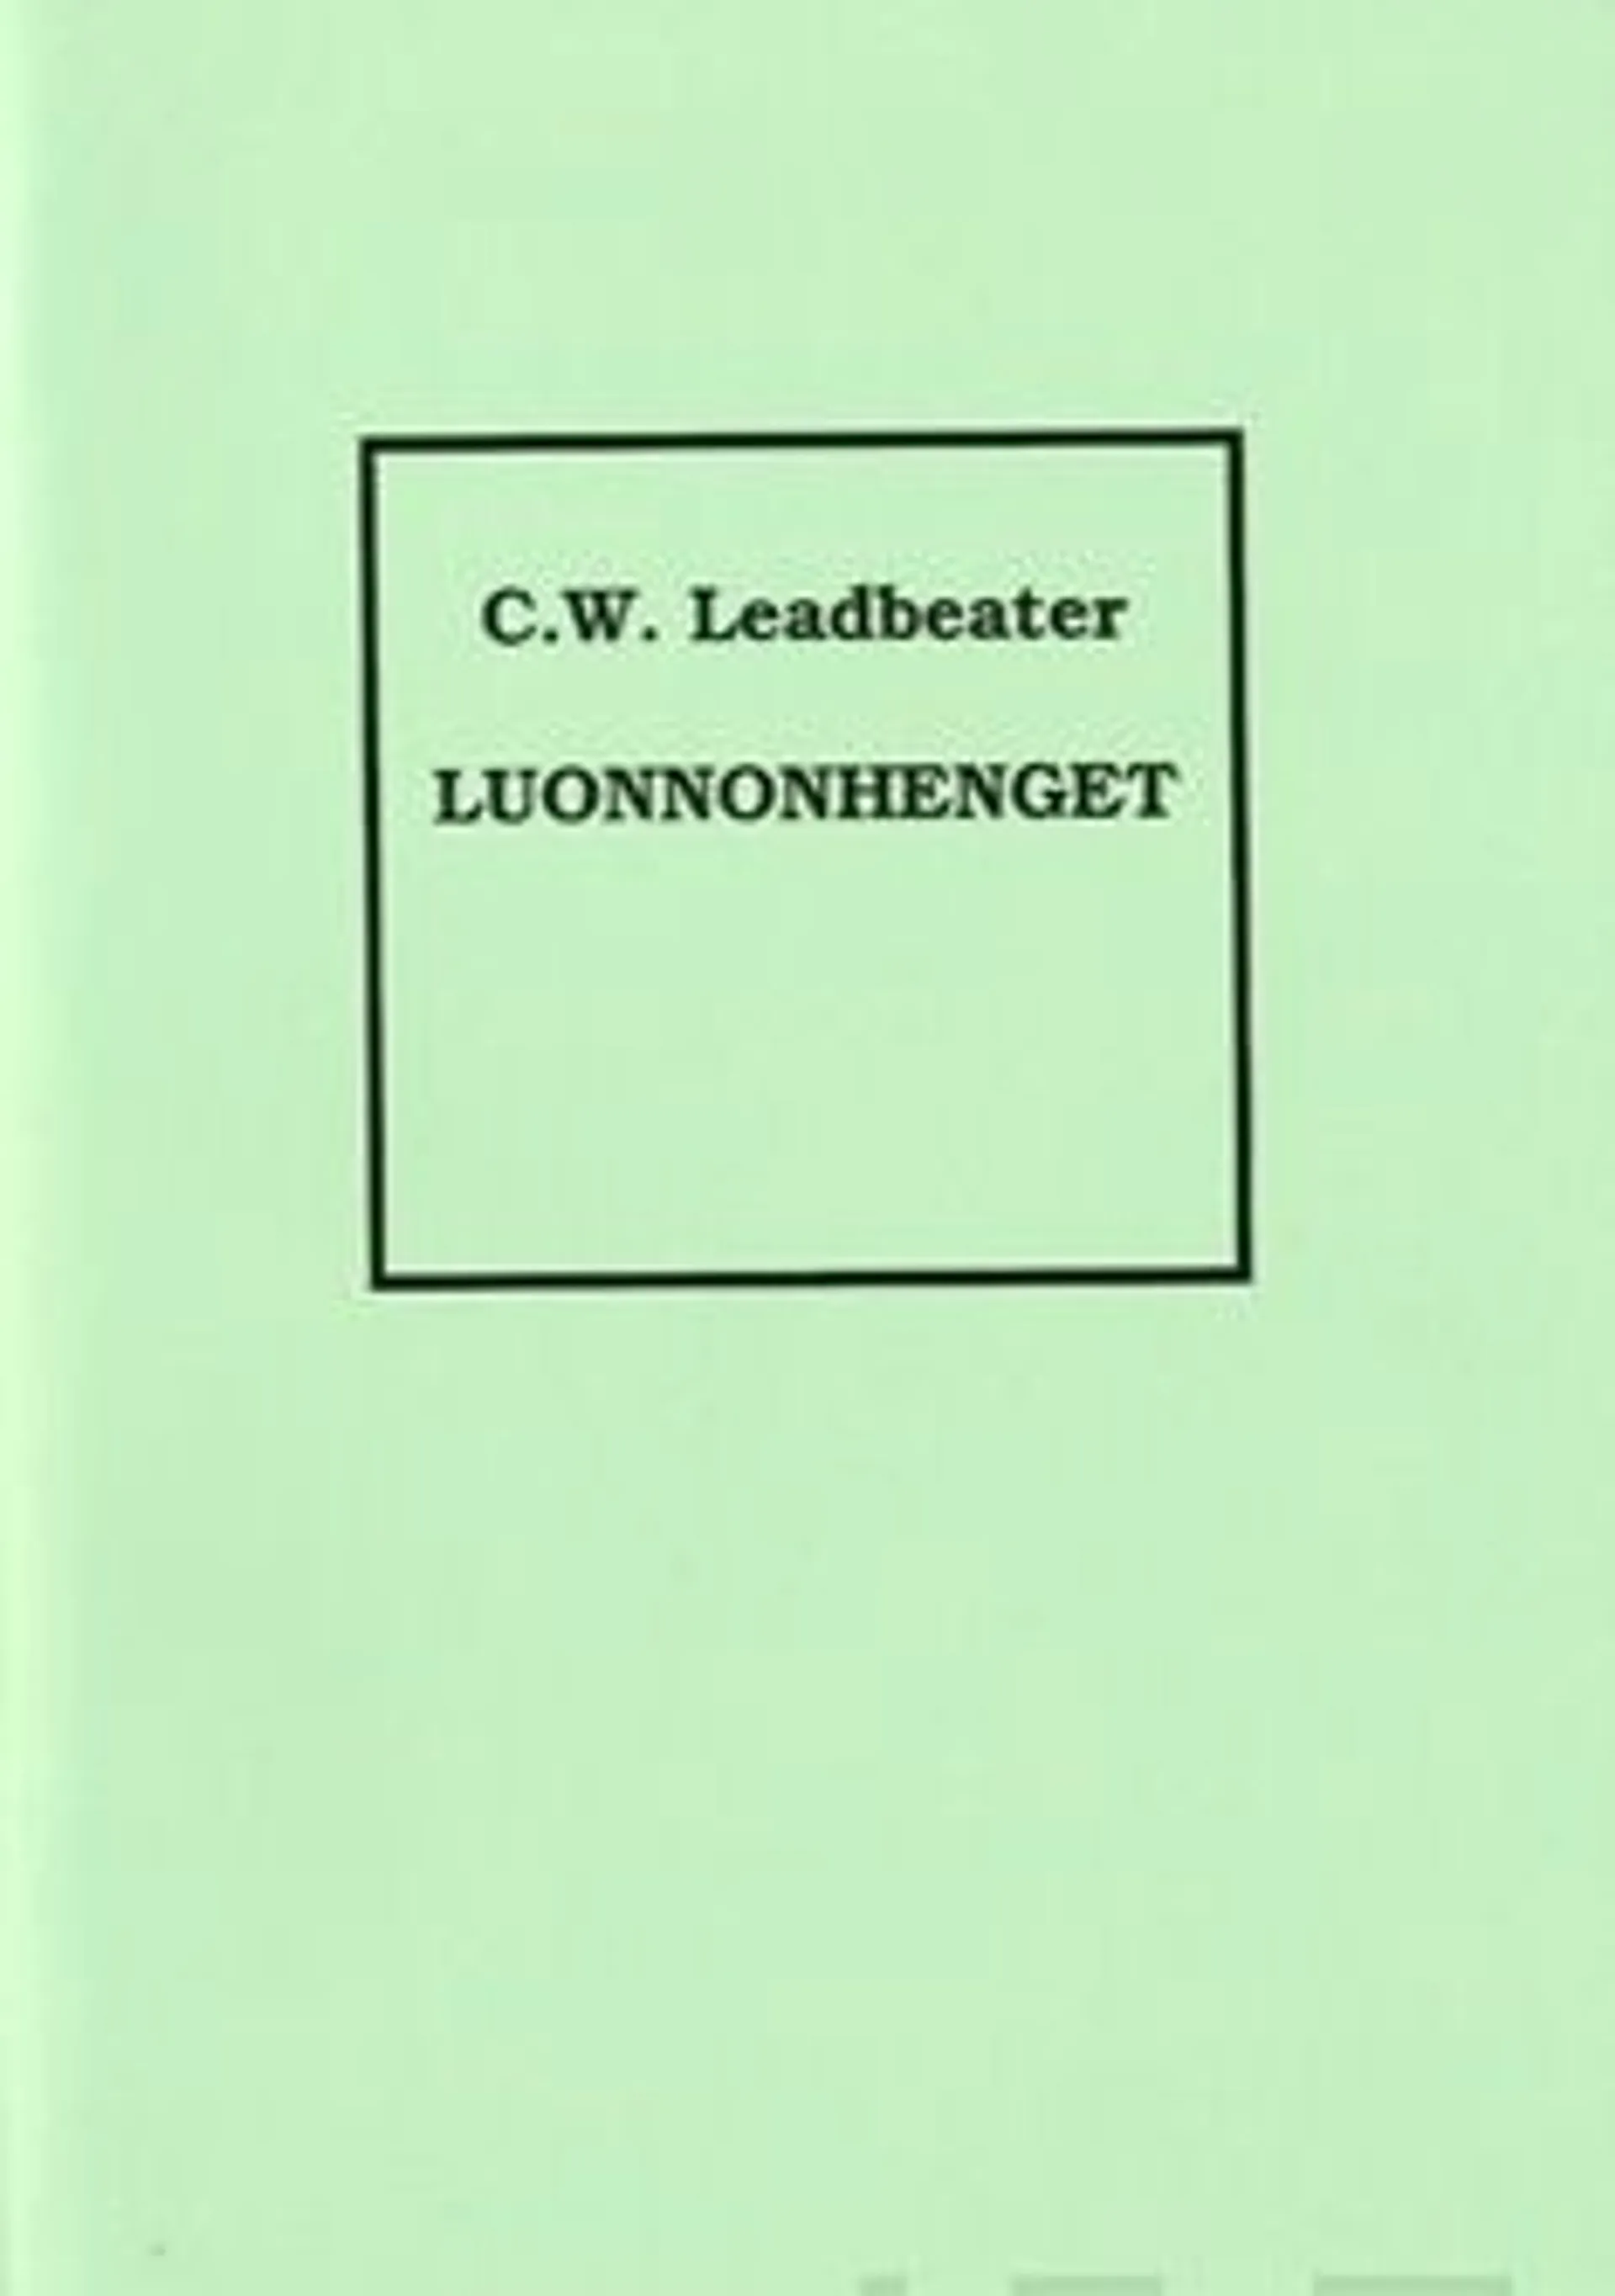 Leadbeater, Luonnonhenget